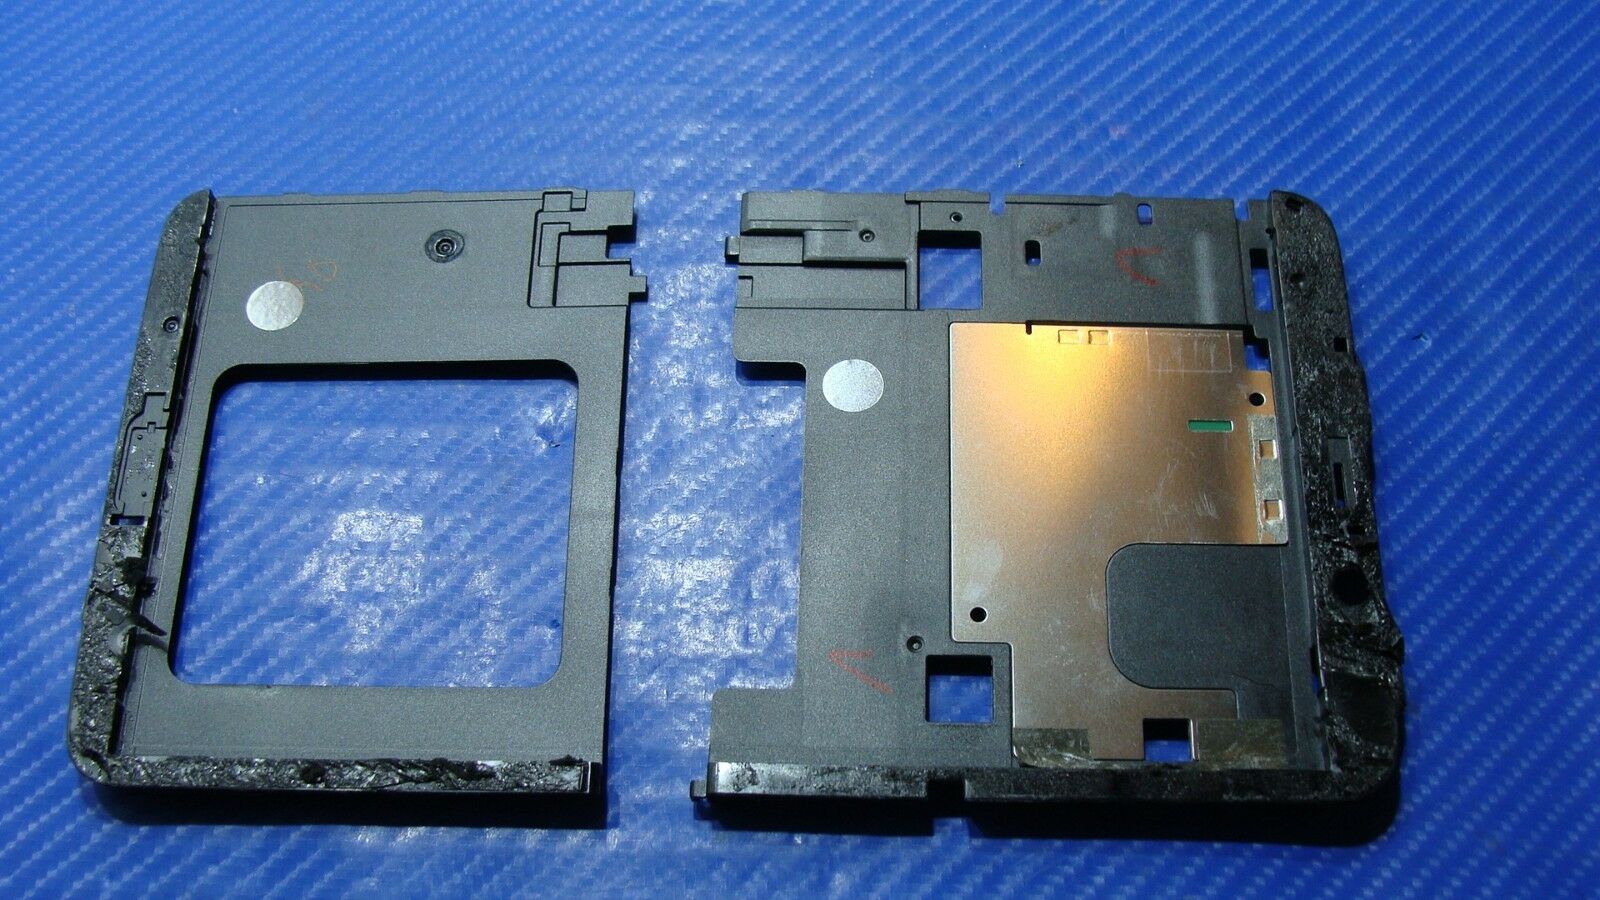 Samsung Galaxy Tab 3 SM-T113 7" Genuine Tablet Plastic Chassis Internal Frame Samsung